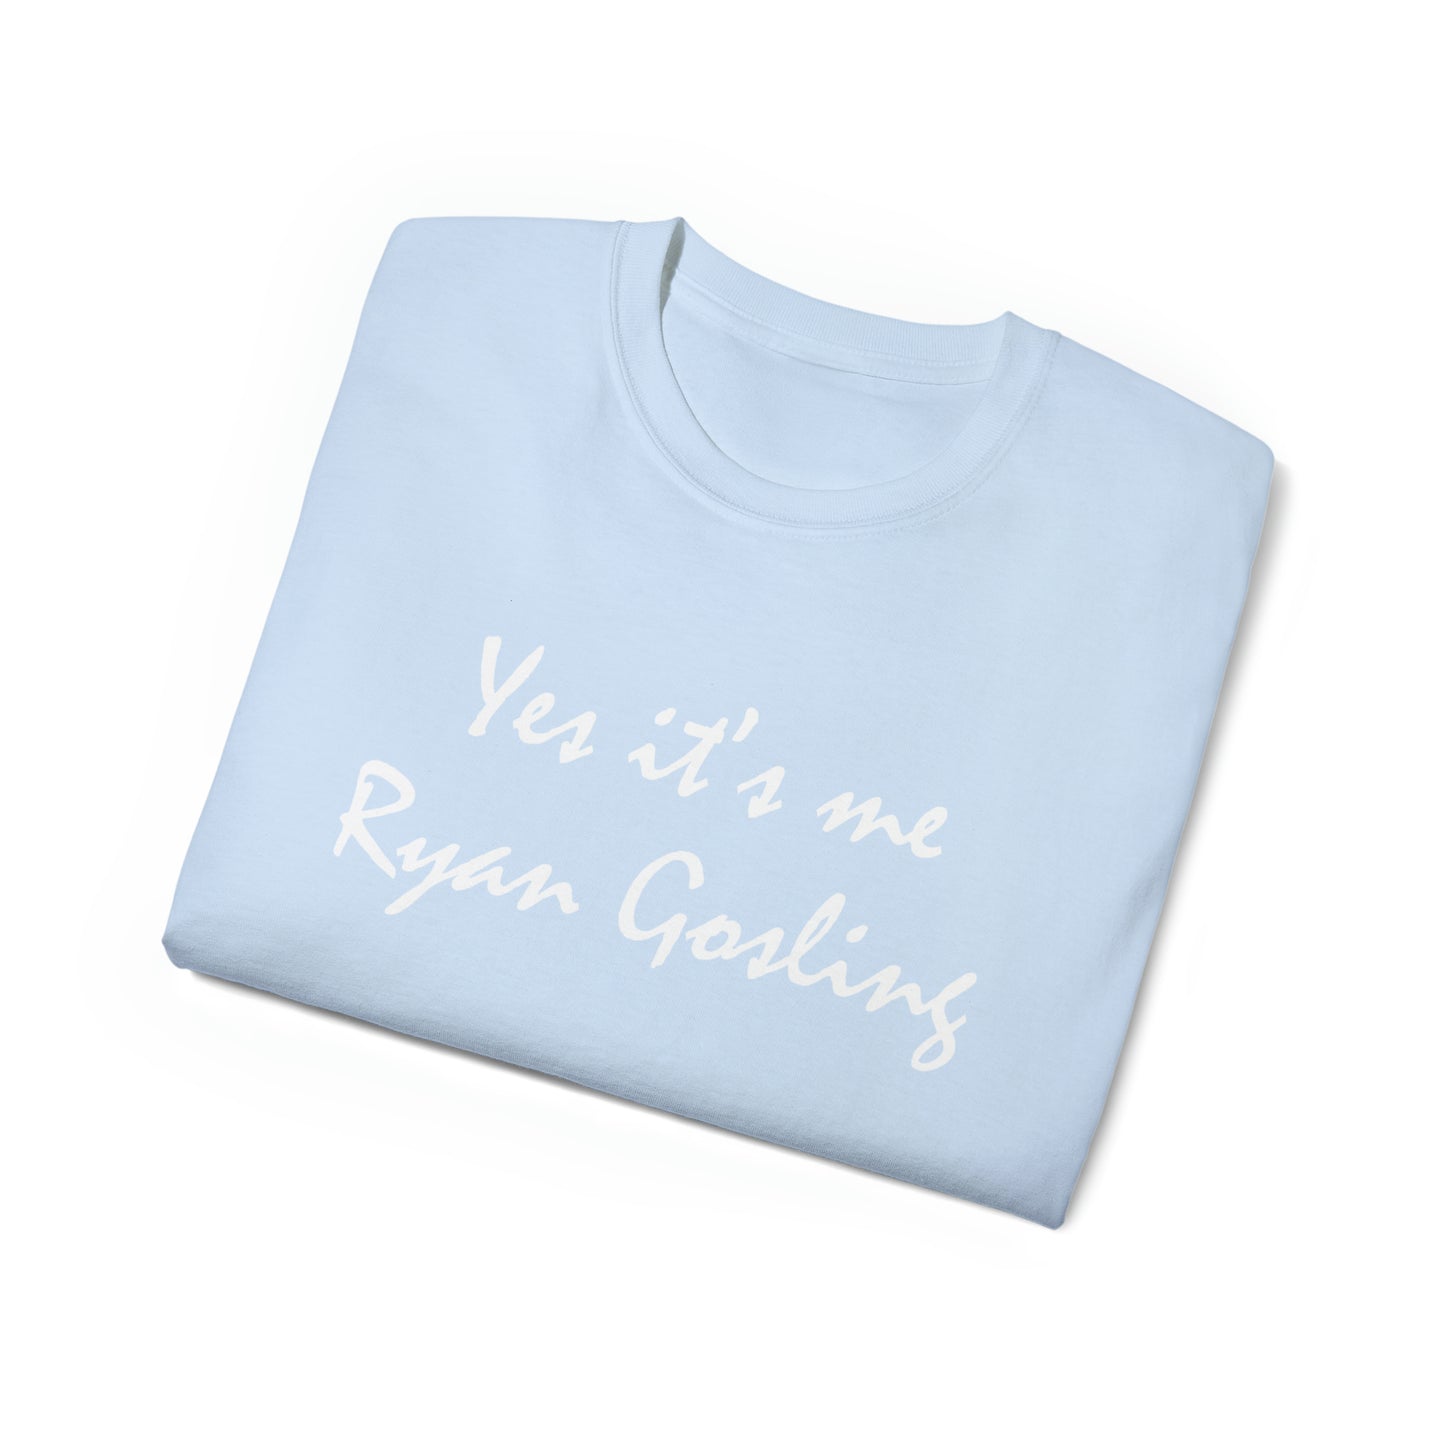 Ultra Cotton Tee Yes it's me Ryan Gosling